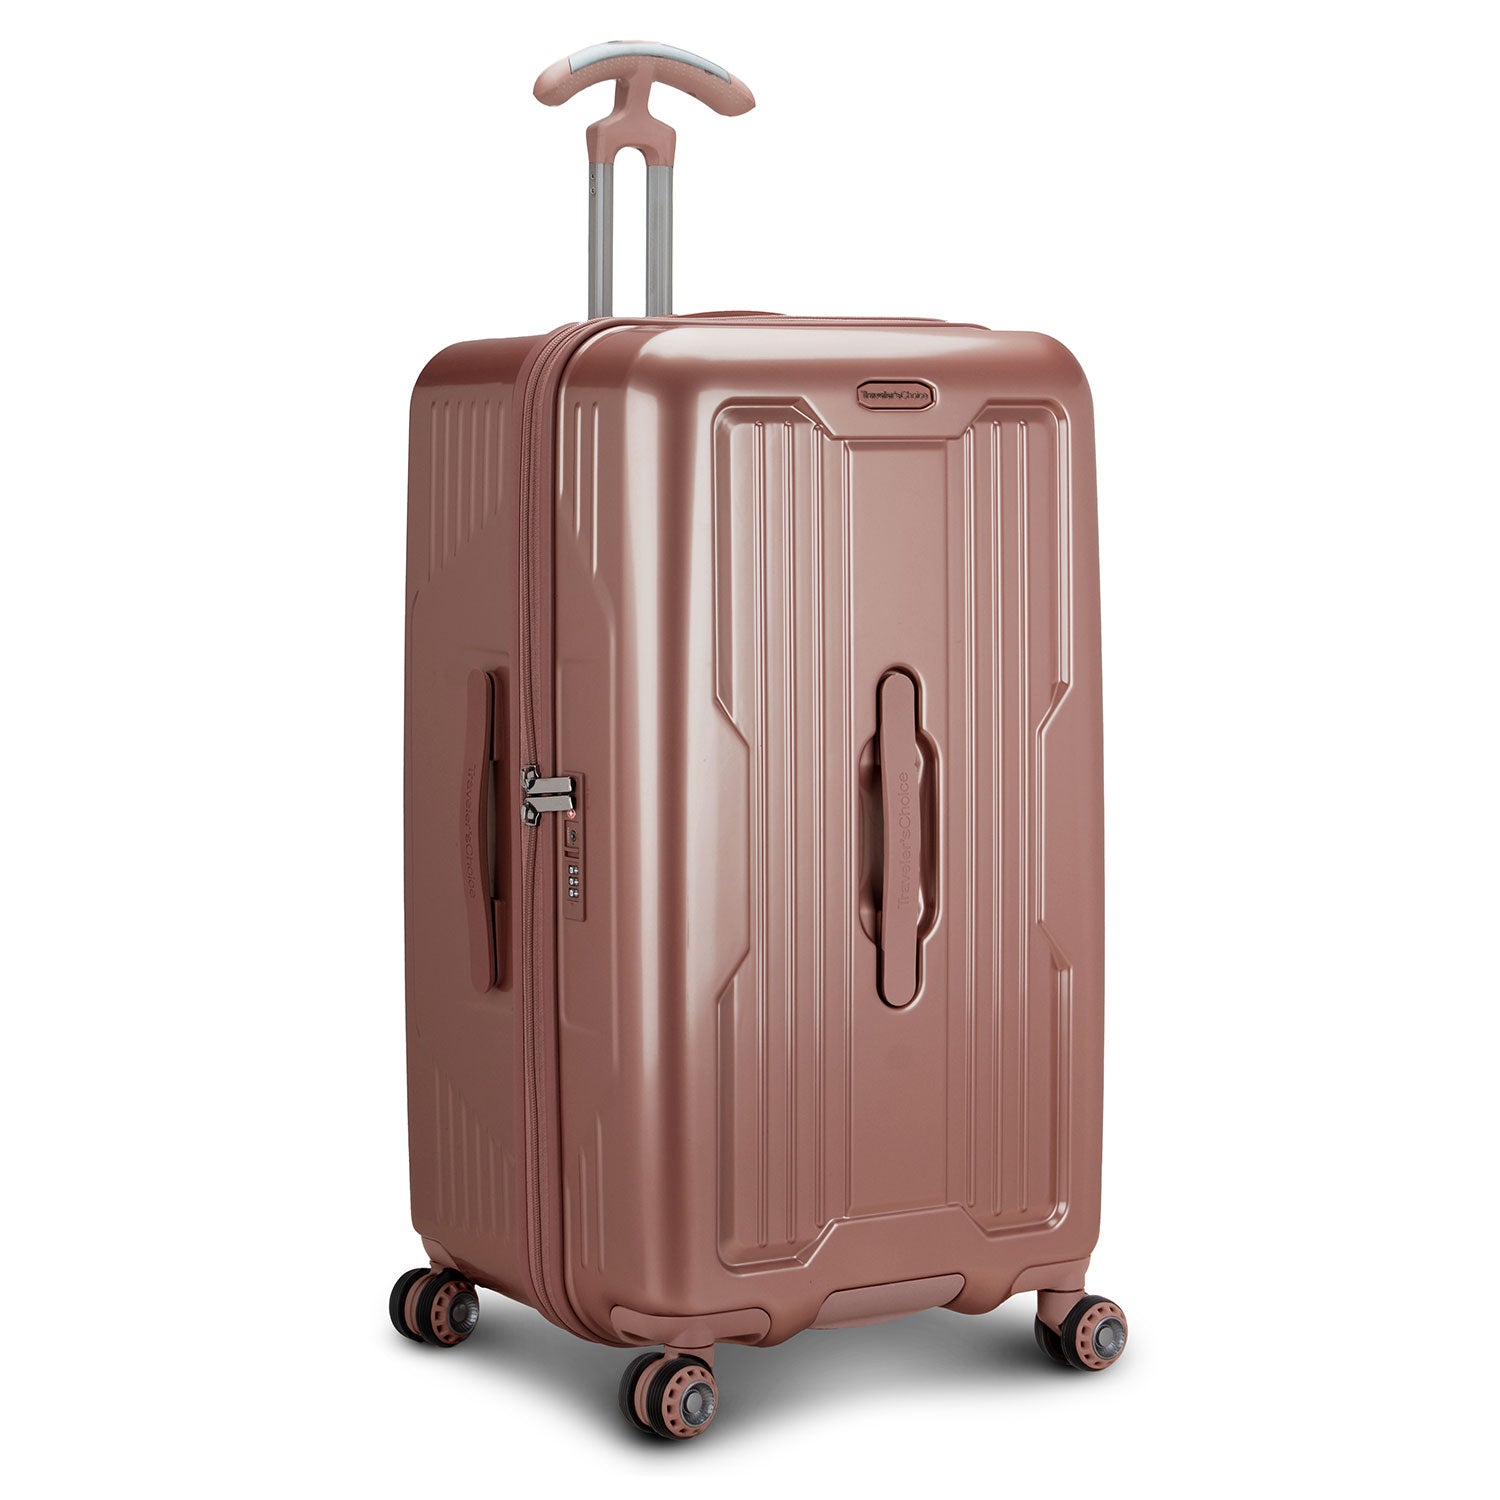 Ultimax II Medium Trunk Spinner Luggage Traveler's Choice